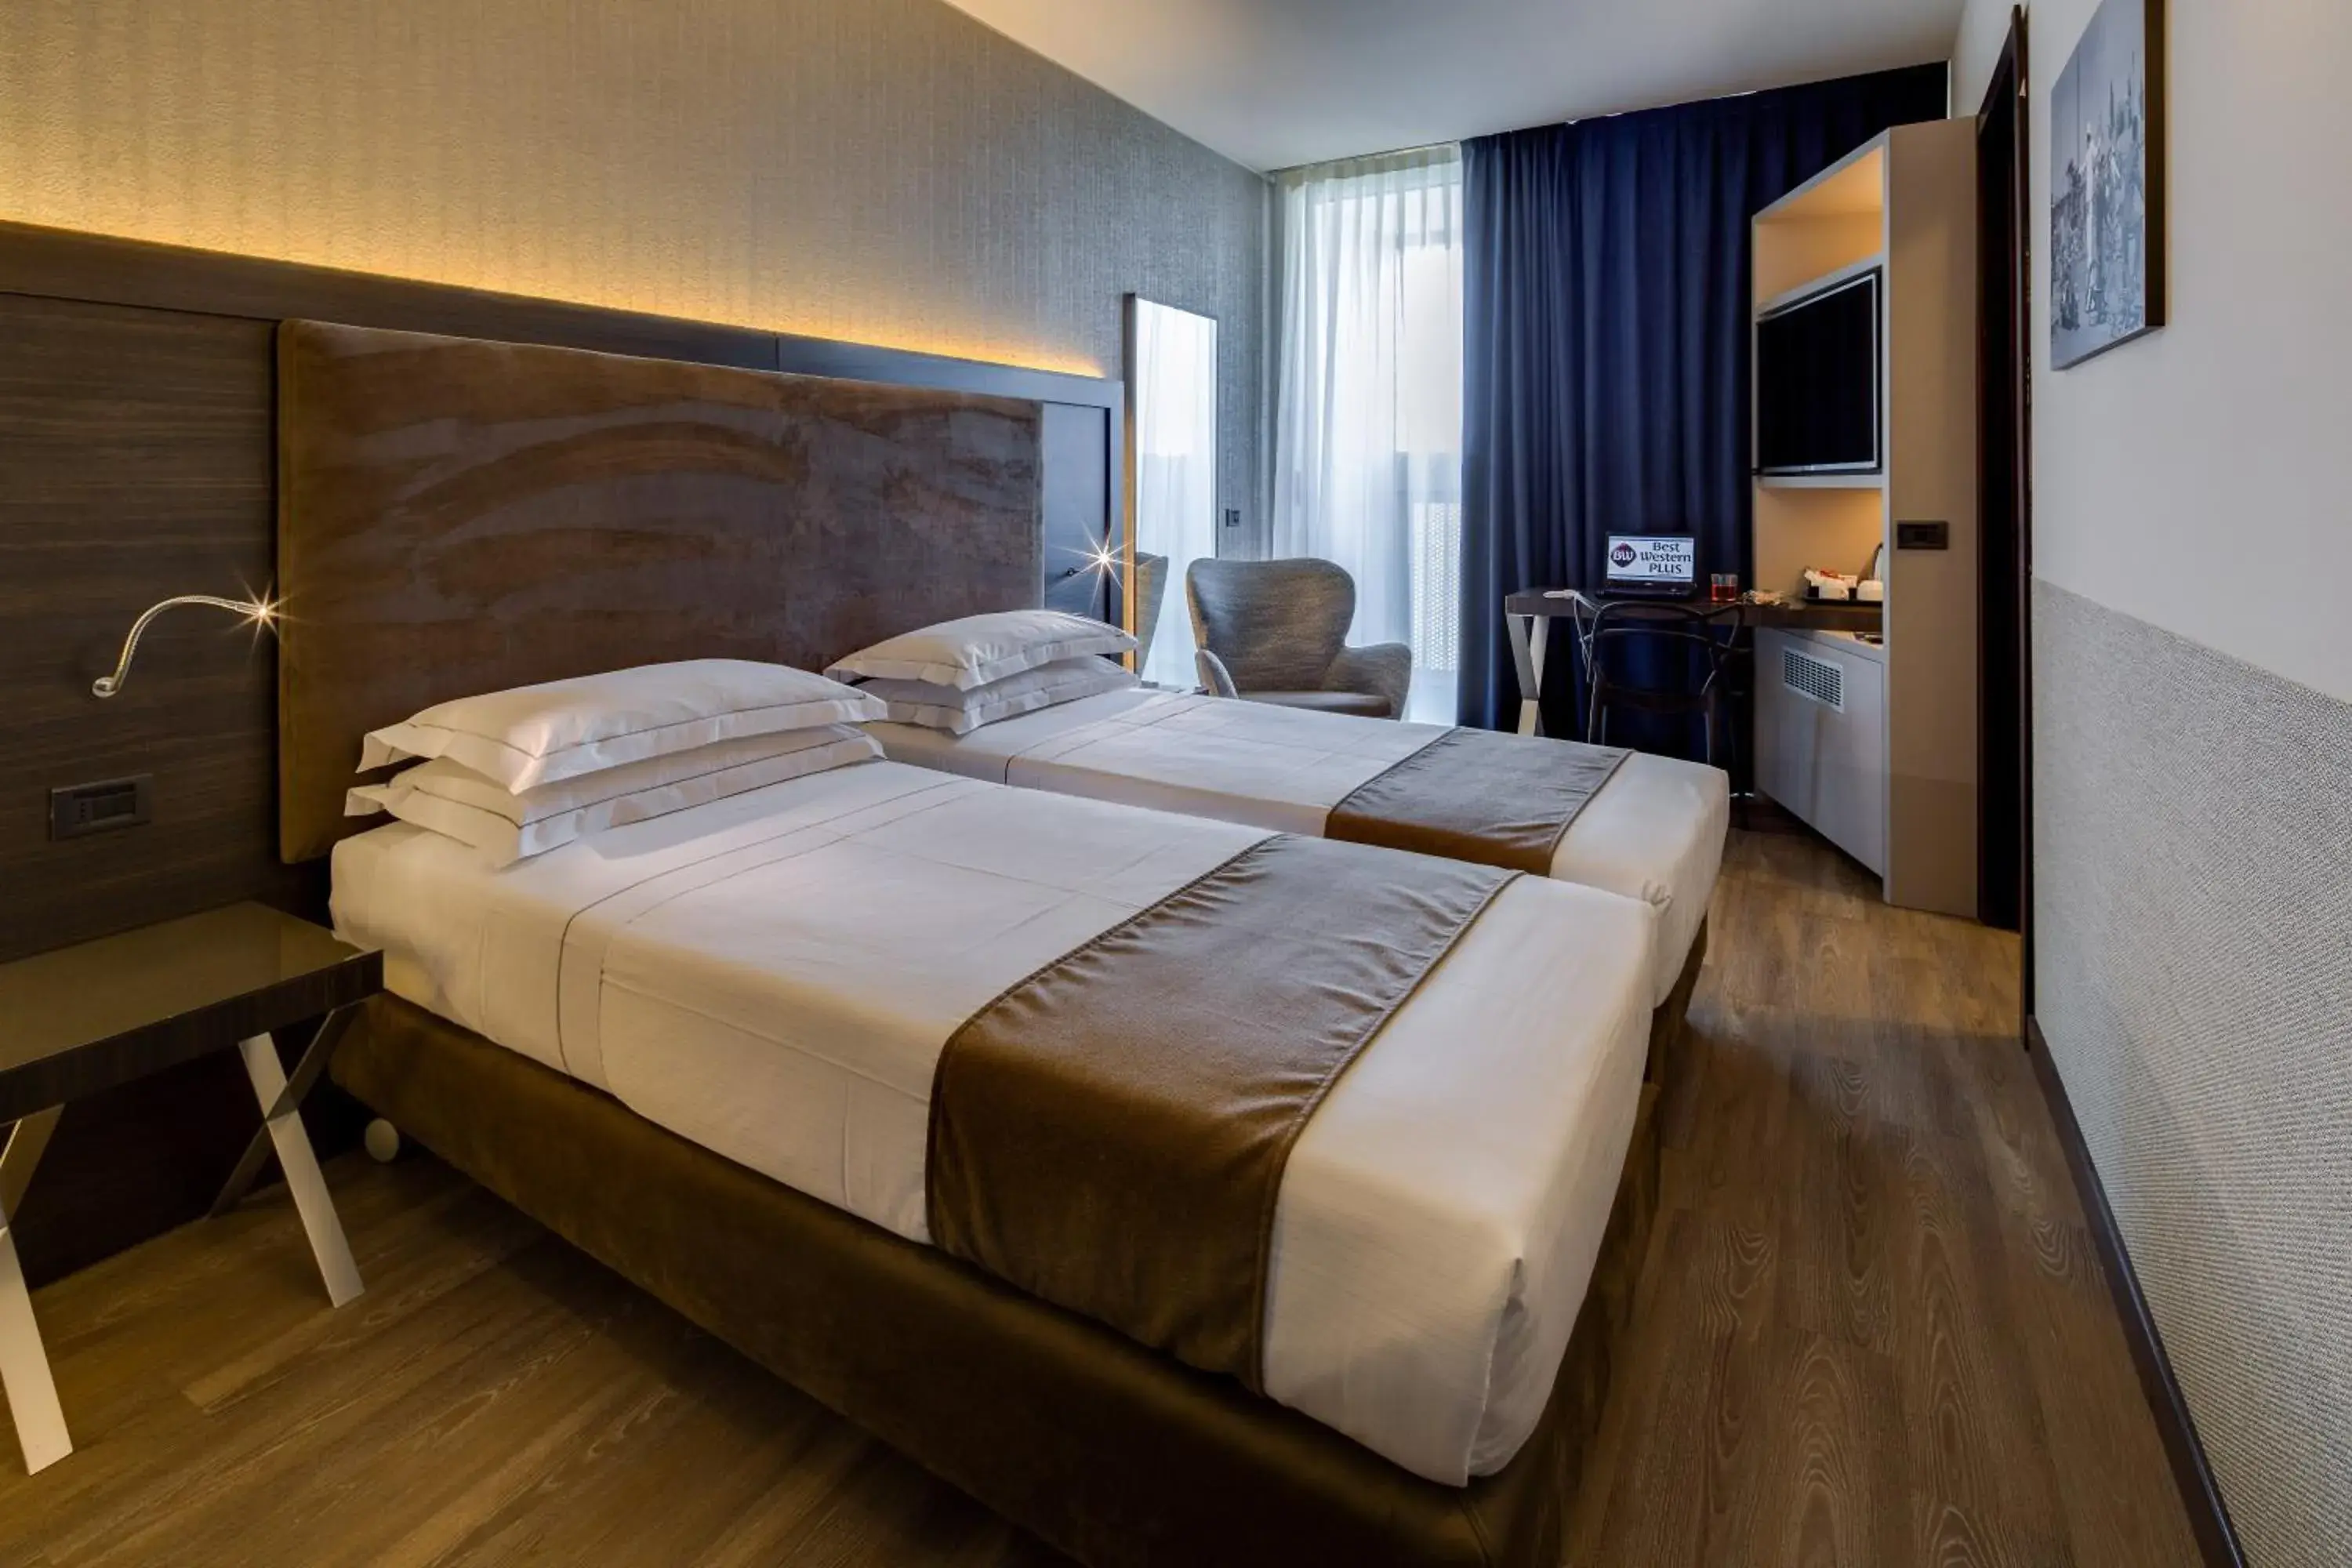 Bedroom, Bed in Best Western Plus Hotel Farnese